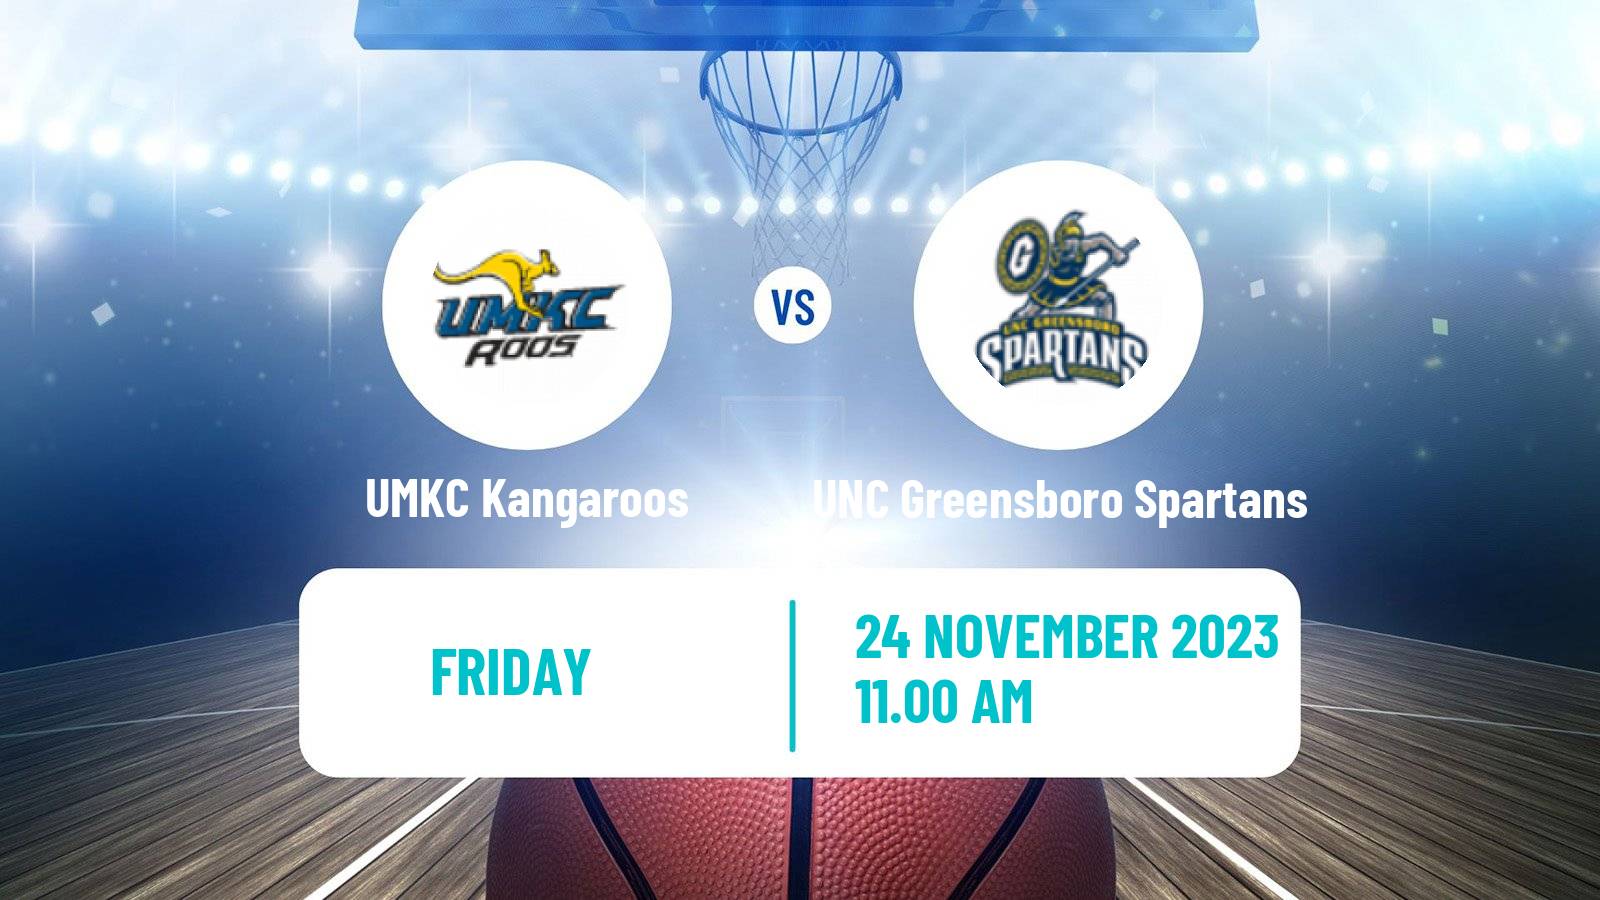 Basketball NCAA College Basketball UMKC Kangaroos - UNC Greensboro Spartans